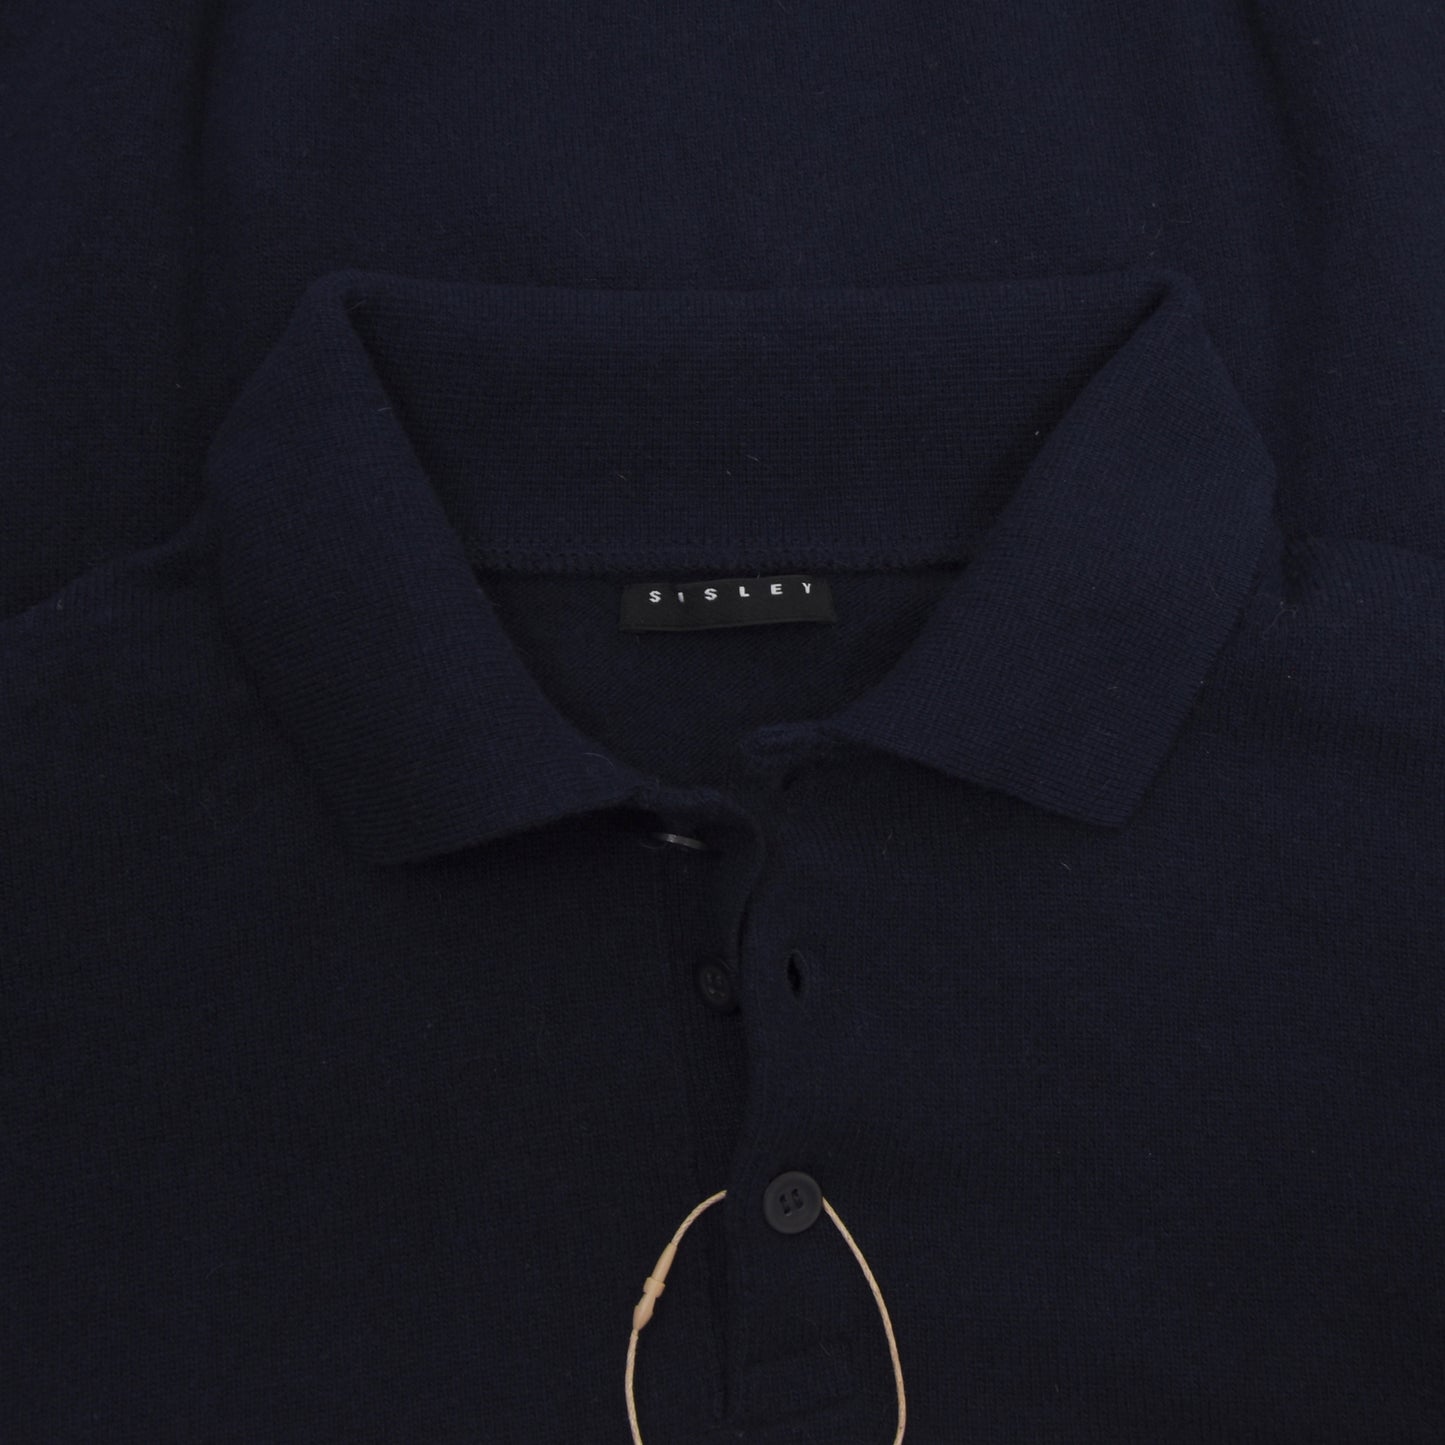 2x Wool Polo Sweaters Sisley/Benetton Size L - Navy Blue & Grey